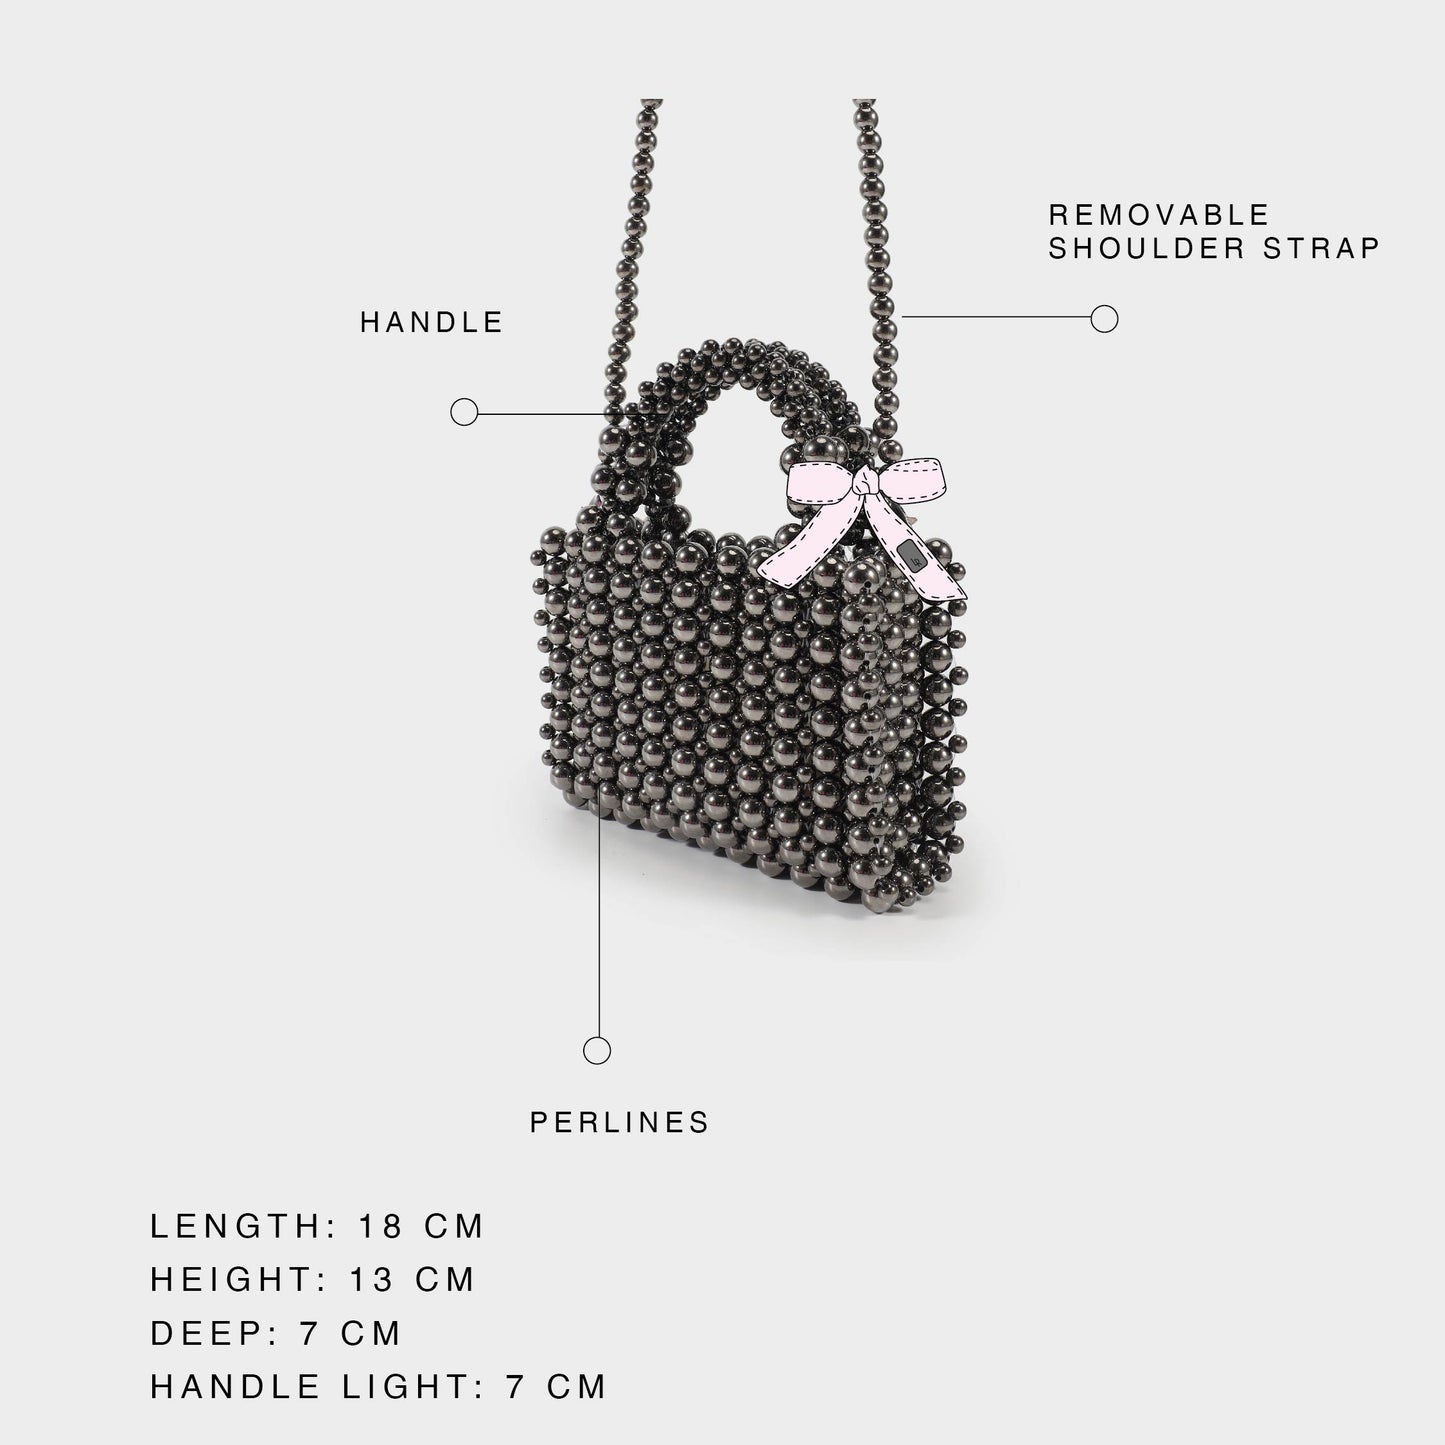 Trunk-shaped handbag with beads